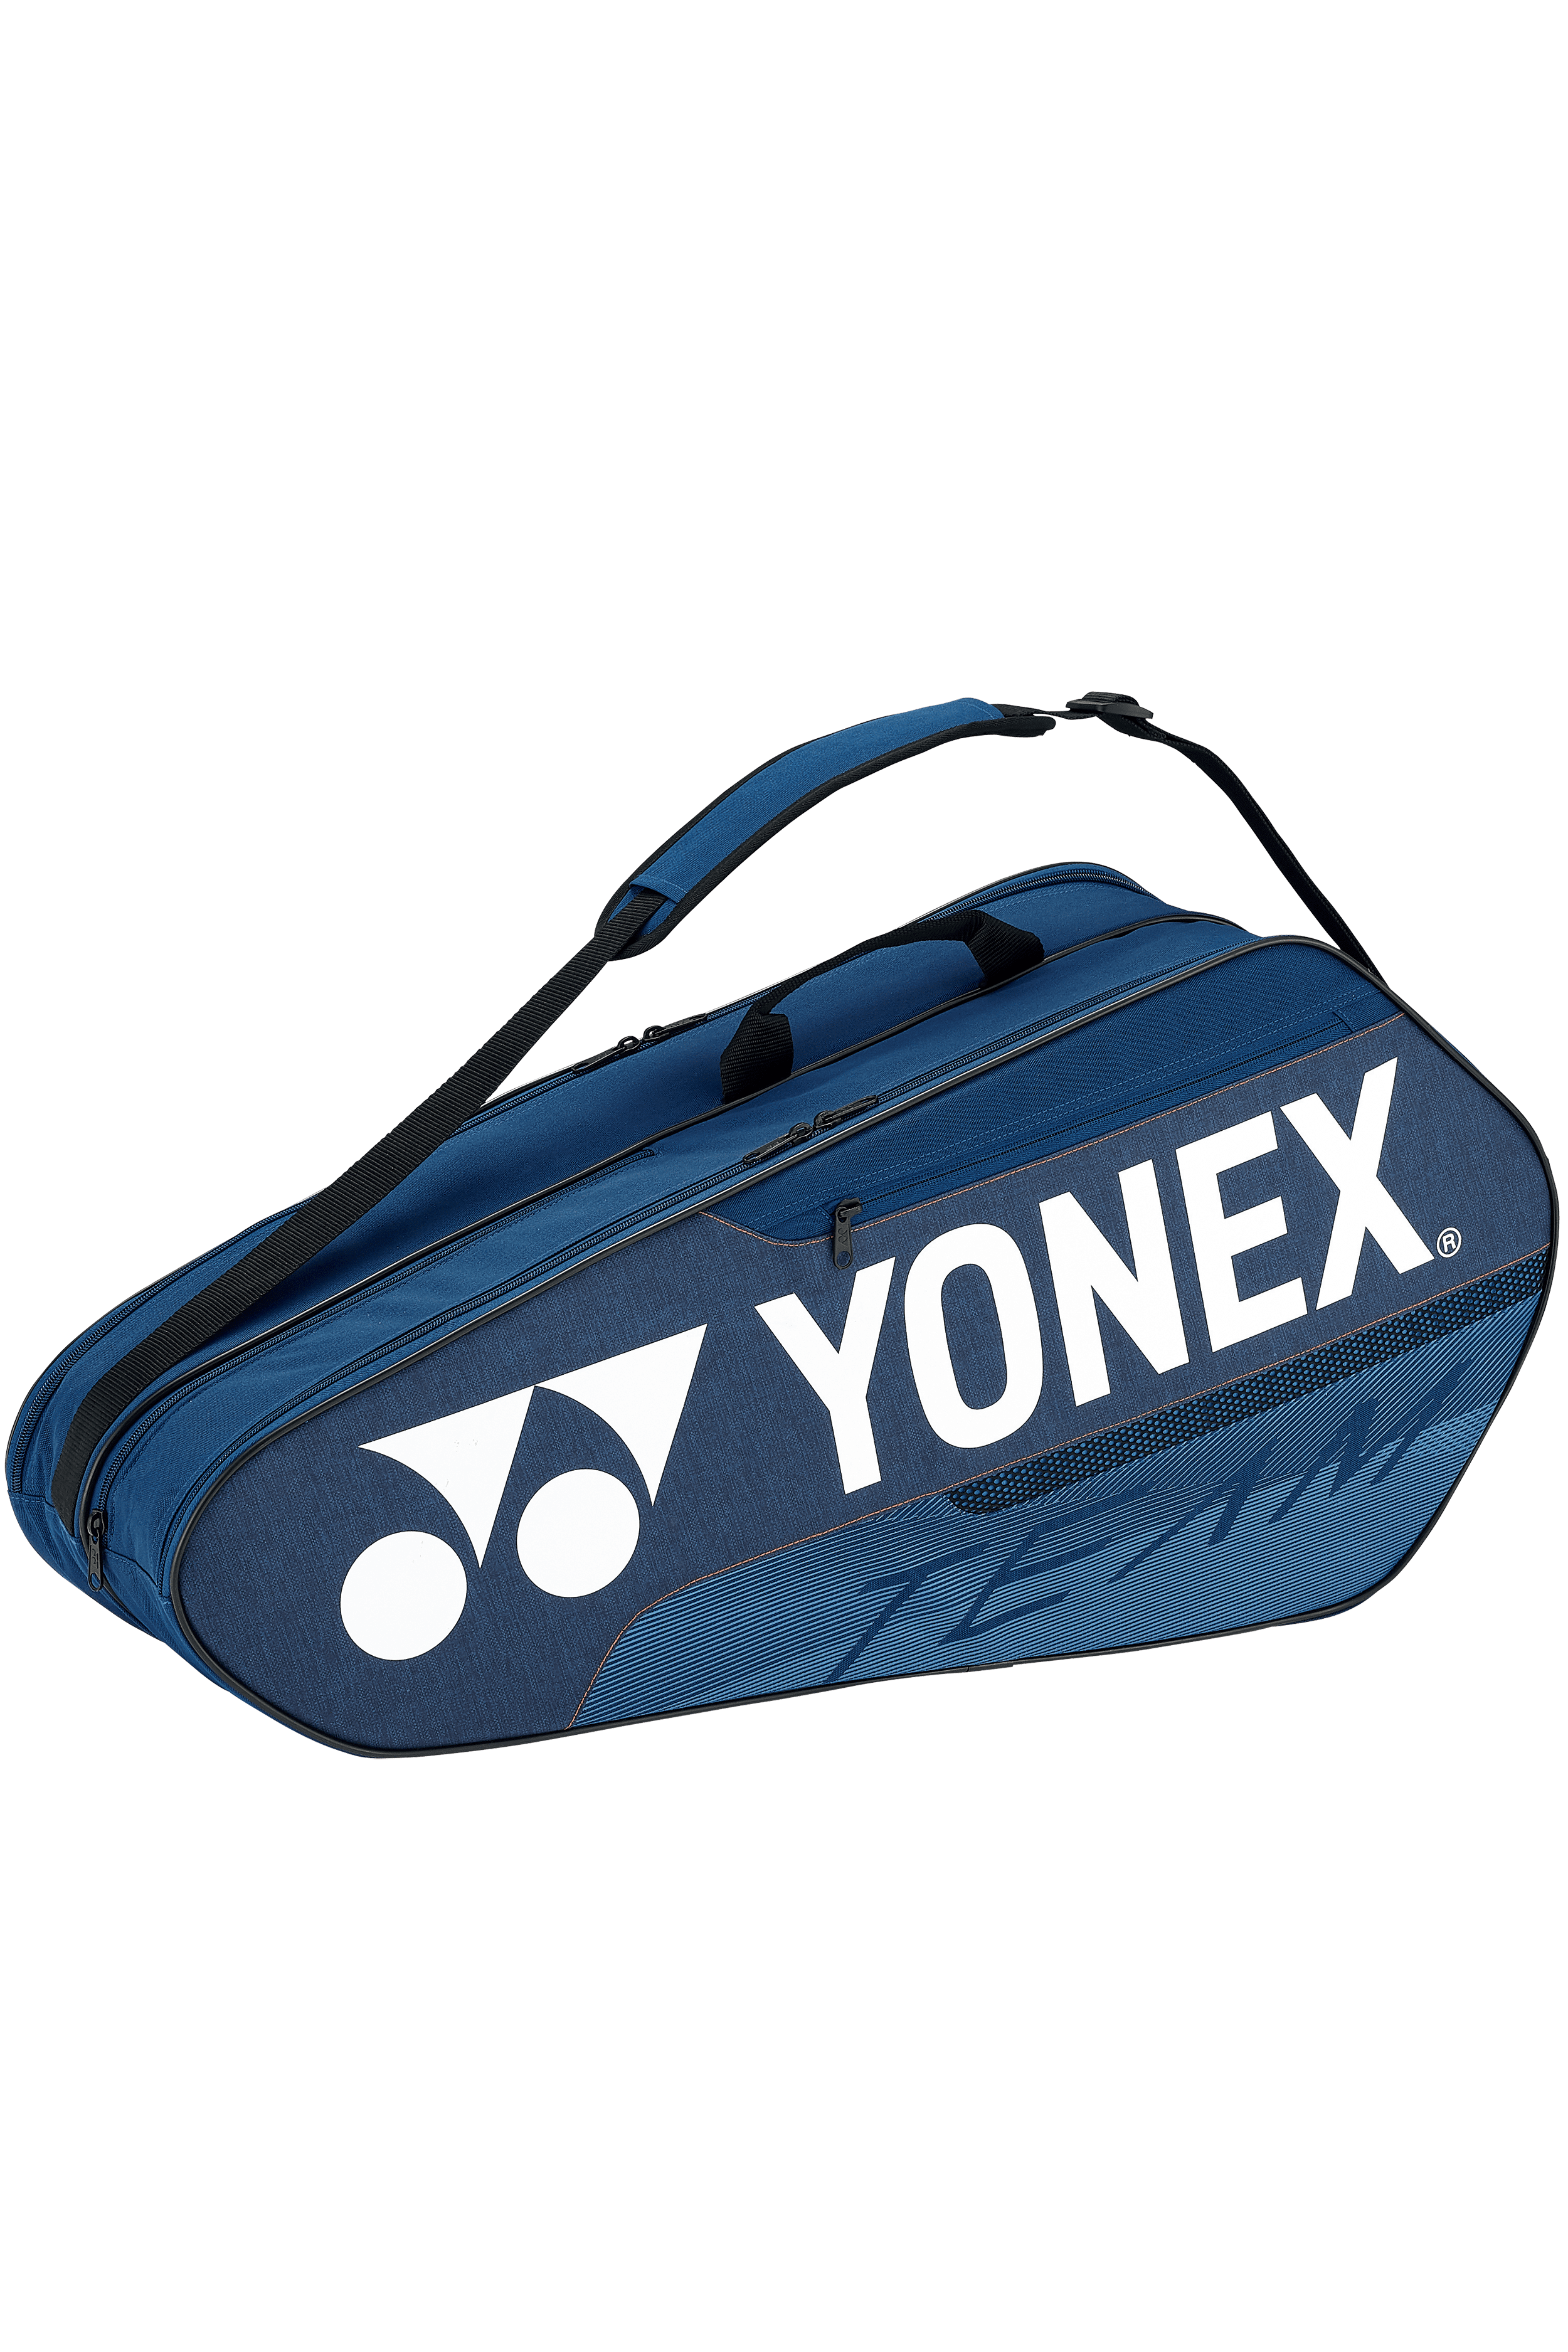 YONEX - TEAM RACKET BAG 42126EX - DEEP BLUE